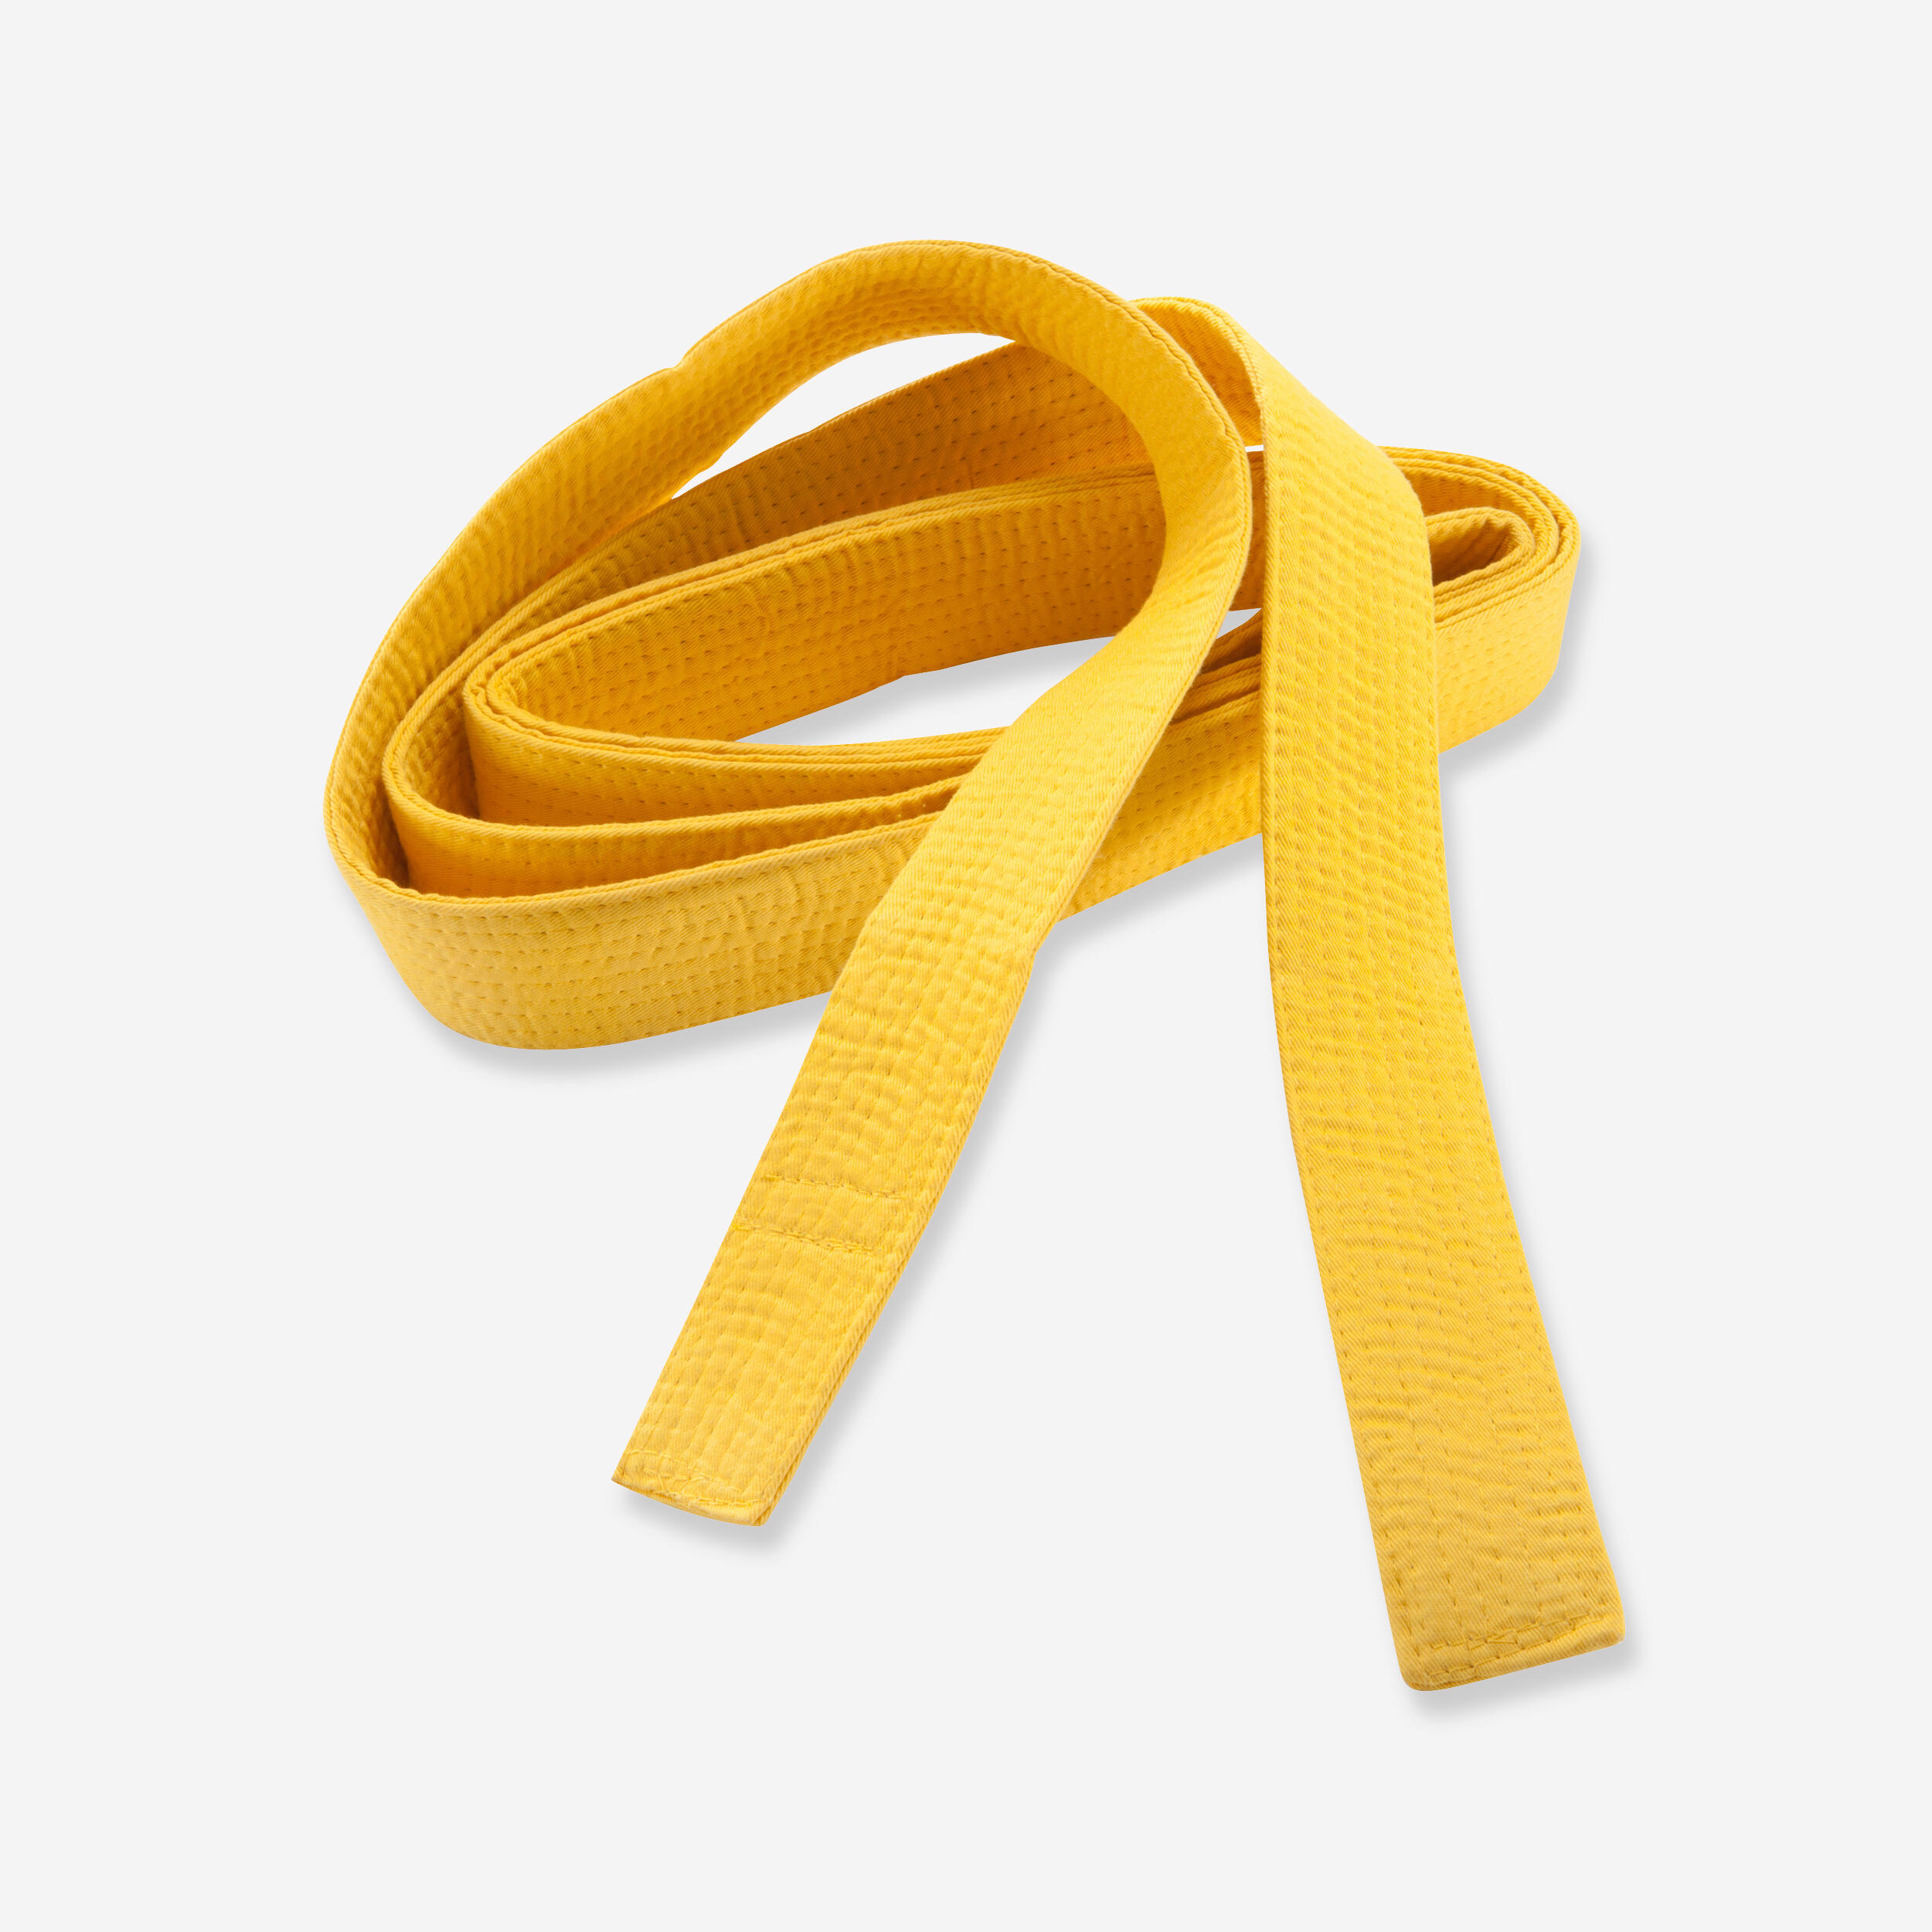 OUTSHOCK Martial Arts Piqué Belt 2.80m - Yellow